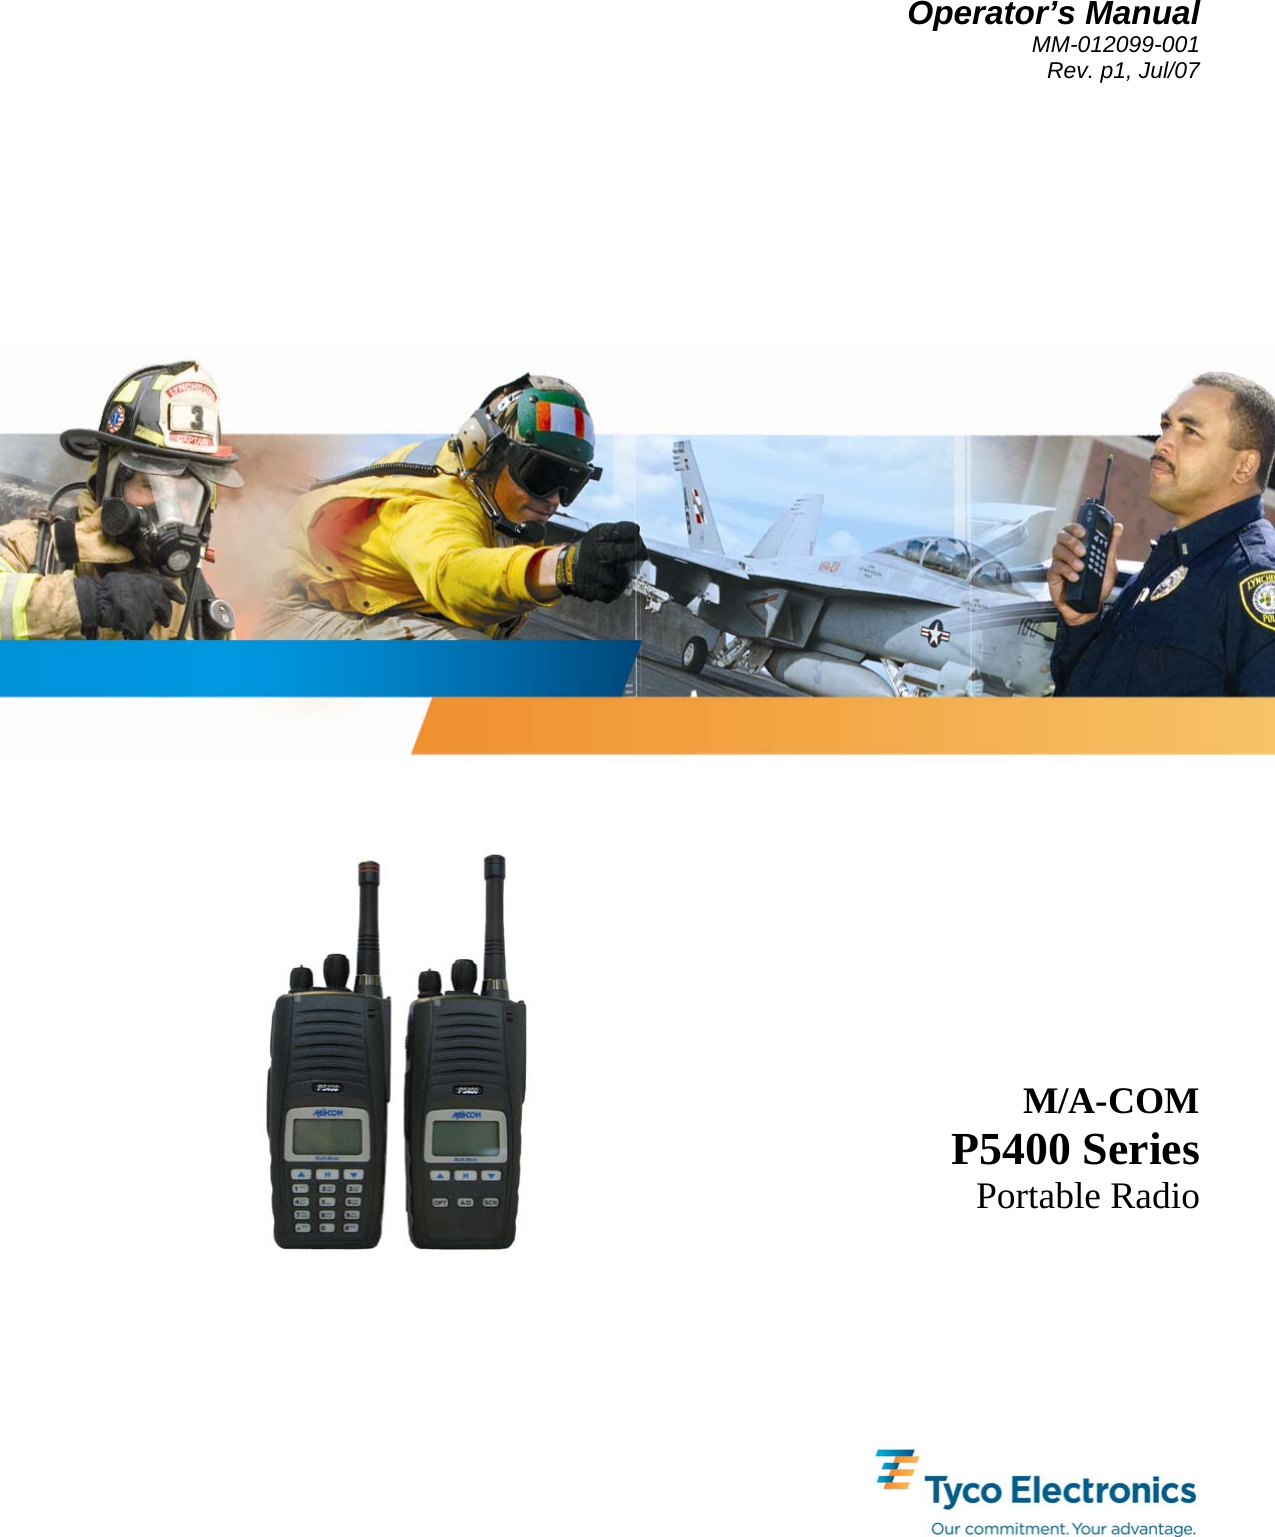 Operator’s Manual MM-012099-001 Rev. p1, Jul/07        M/A-COM P5400 Series Portable Radio 